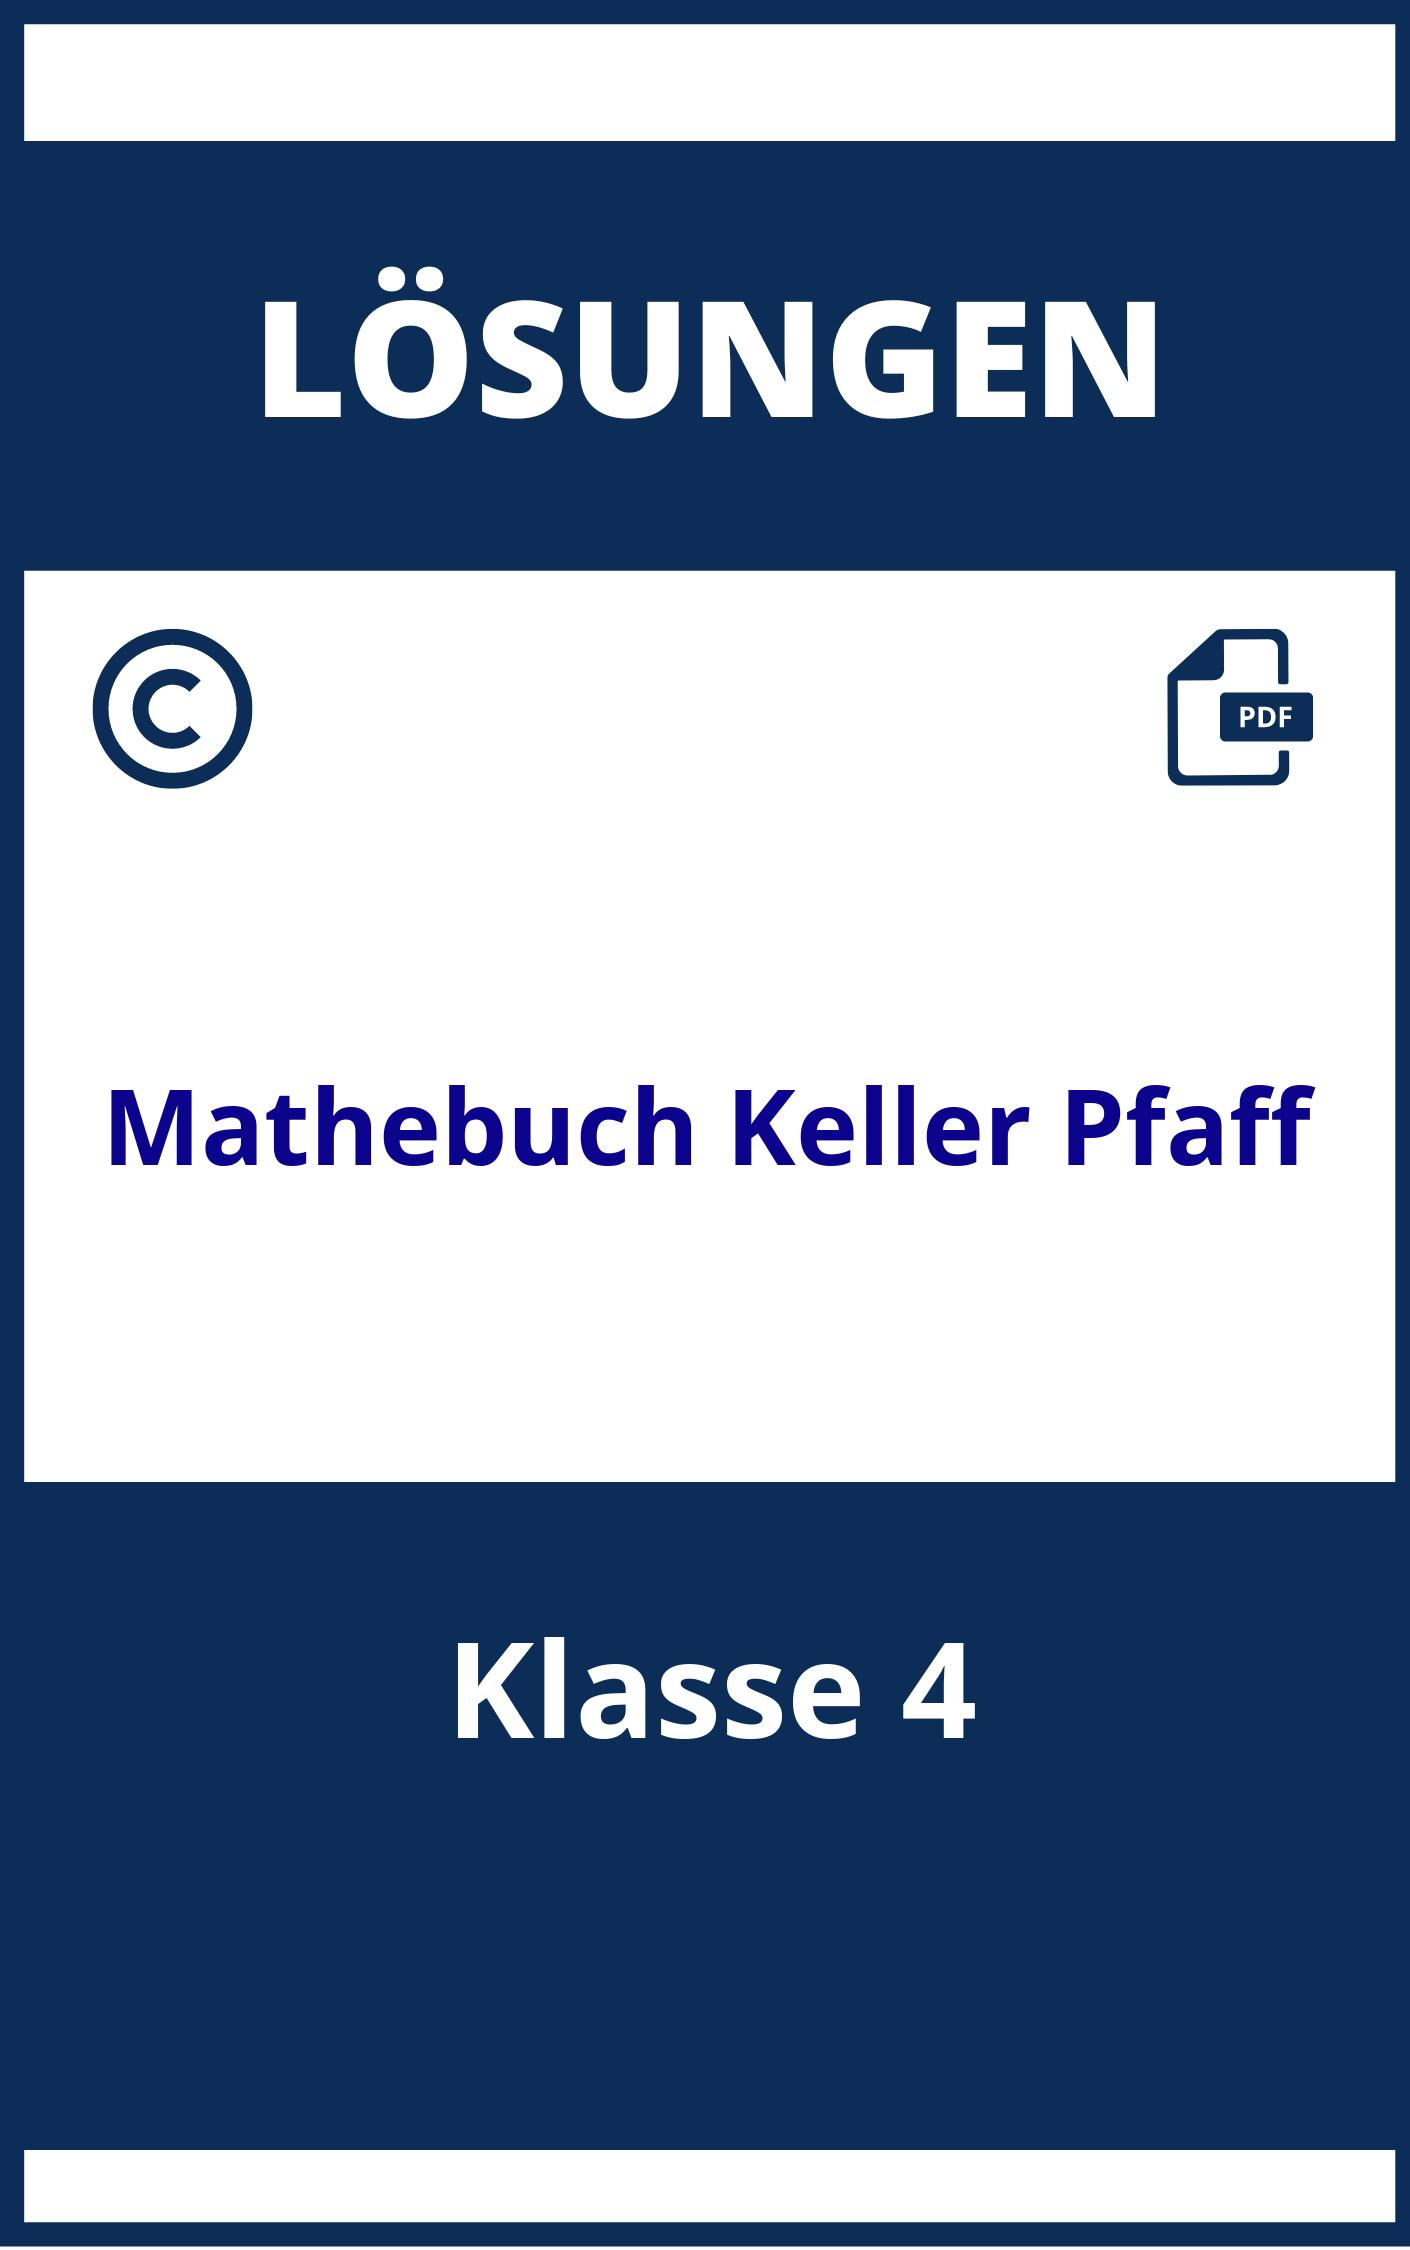 Mathebuch Keller Pfaff 4 Klasse Lösungen